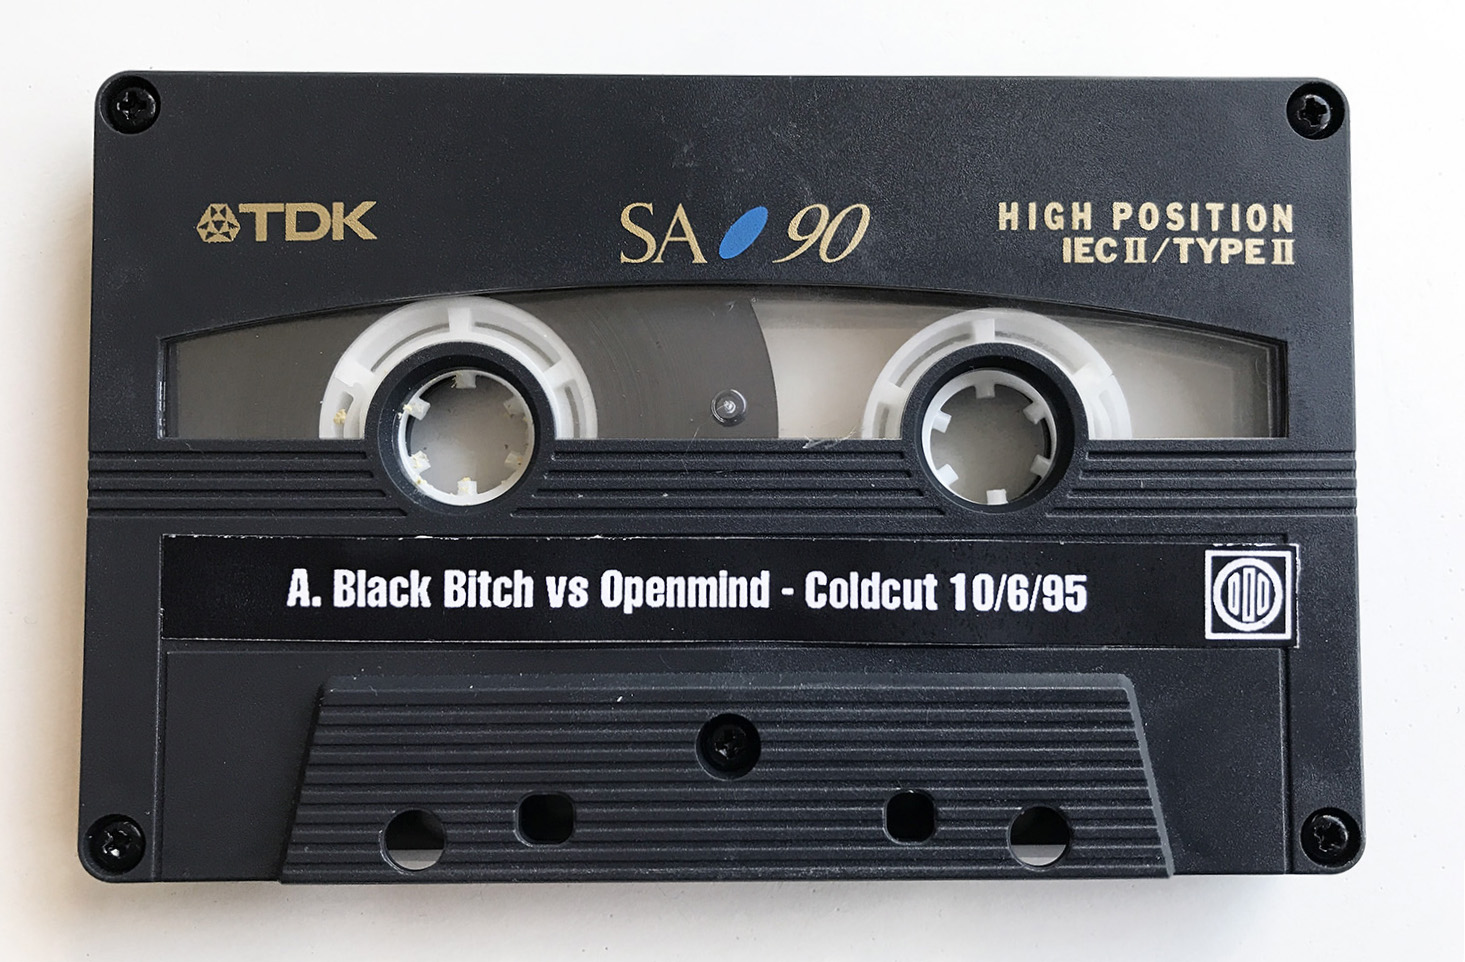 MS184 tape